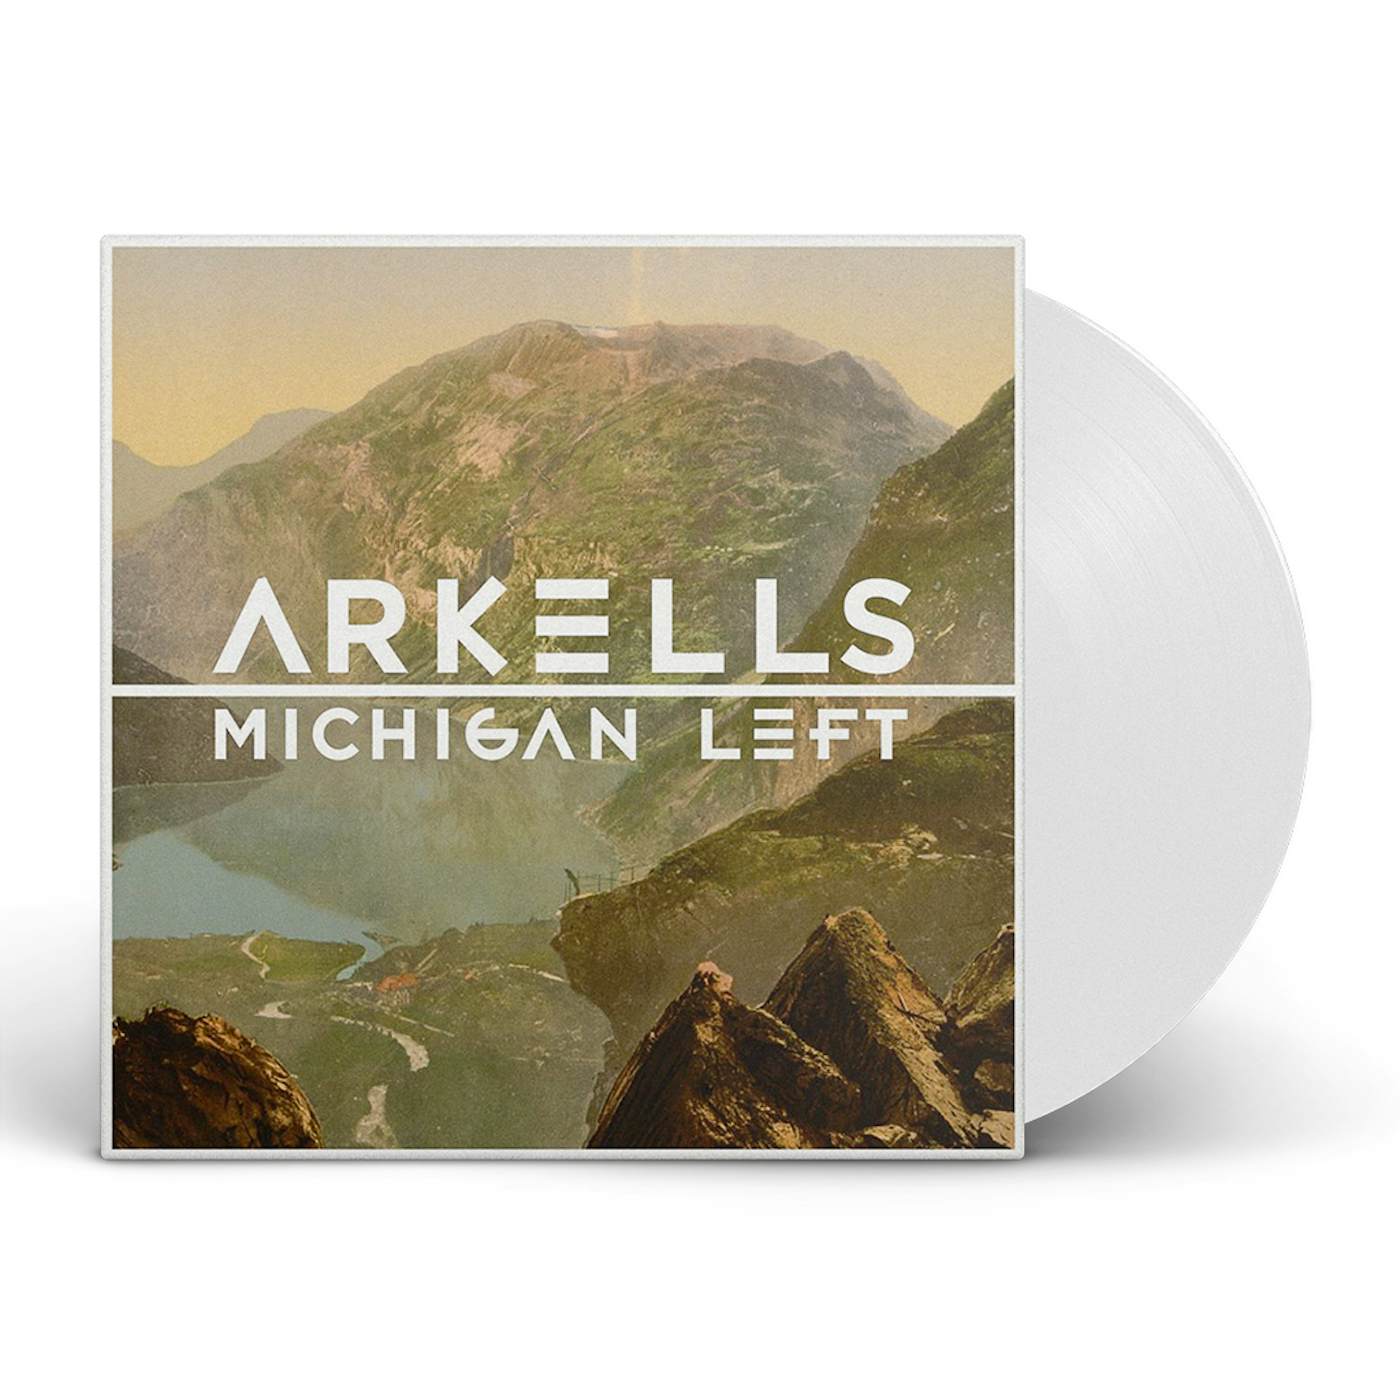 Arkells Michigan Left 12" Vinyl (White)